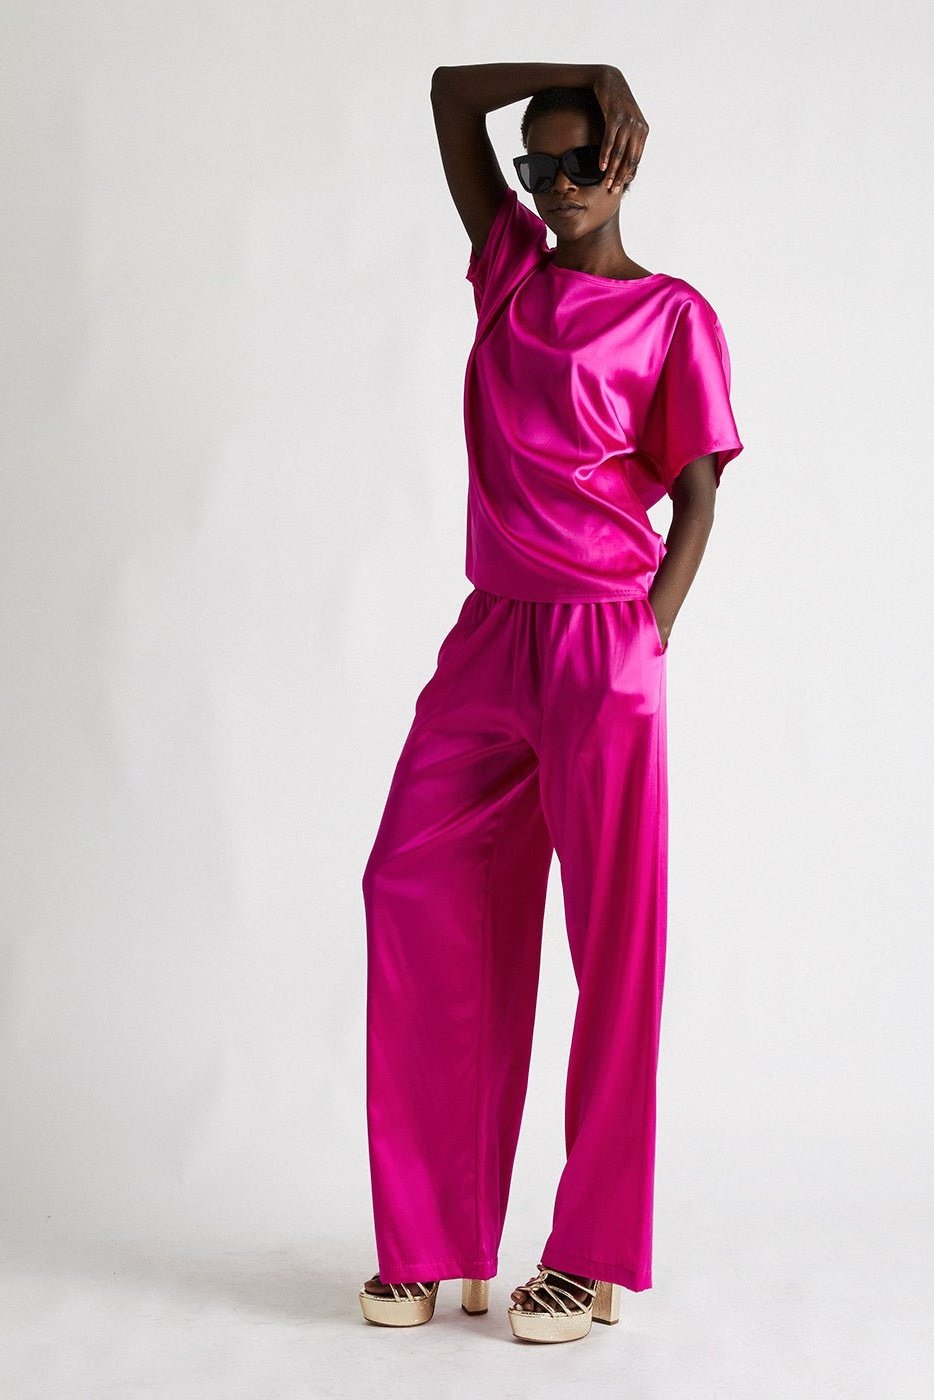 +Beryll Silk Shirt Erica | Hot Pink - +Beryll Silk Shirt Erica | Hot Pink - +Beryll Worn By Good People